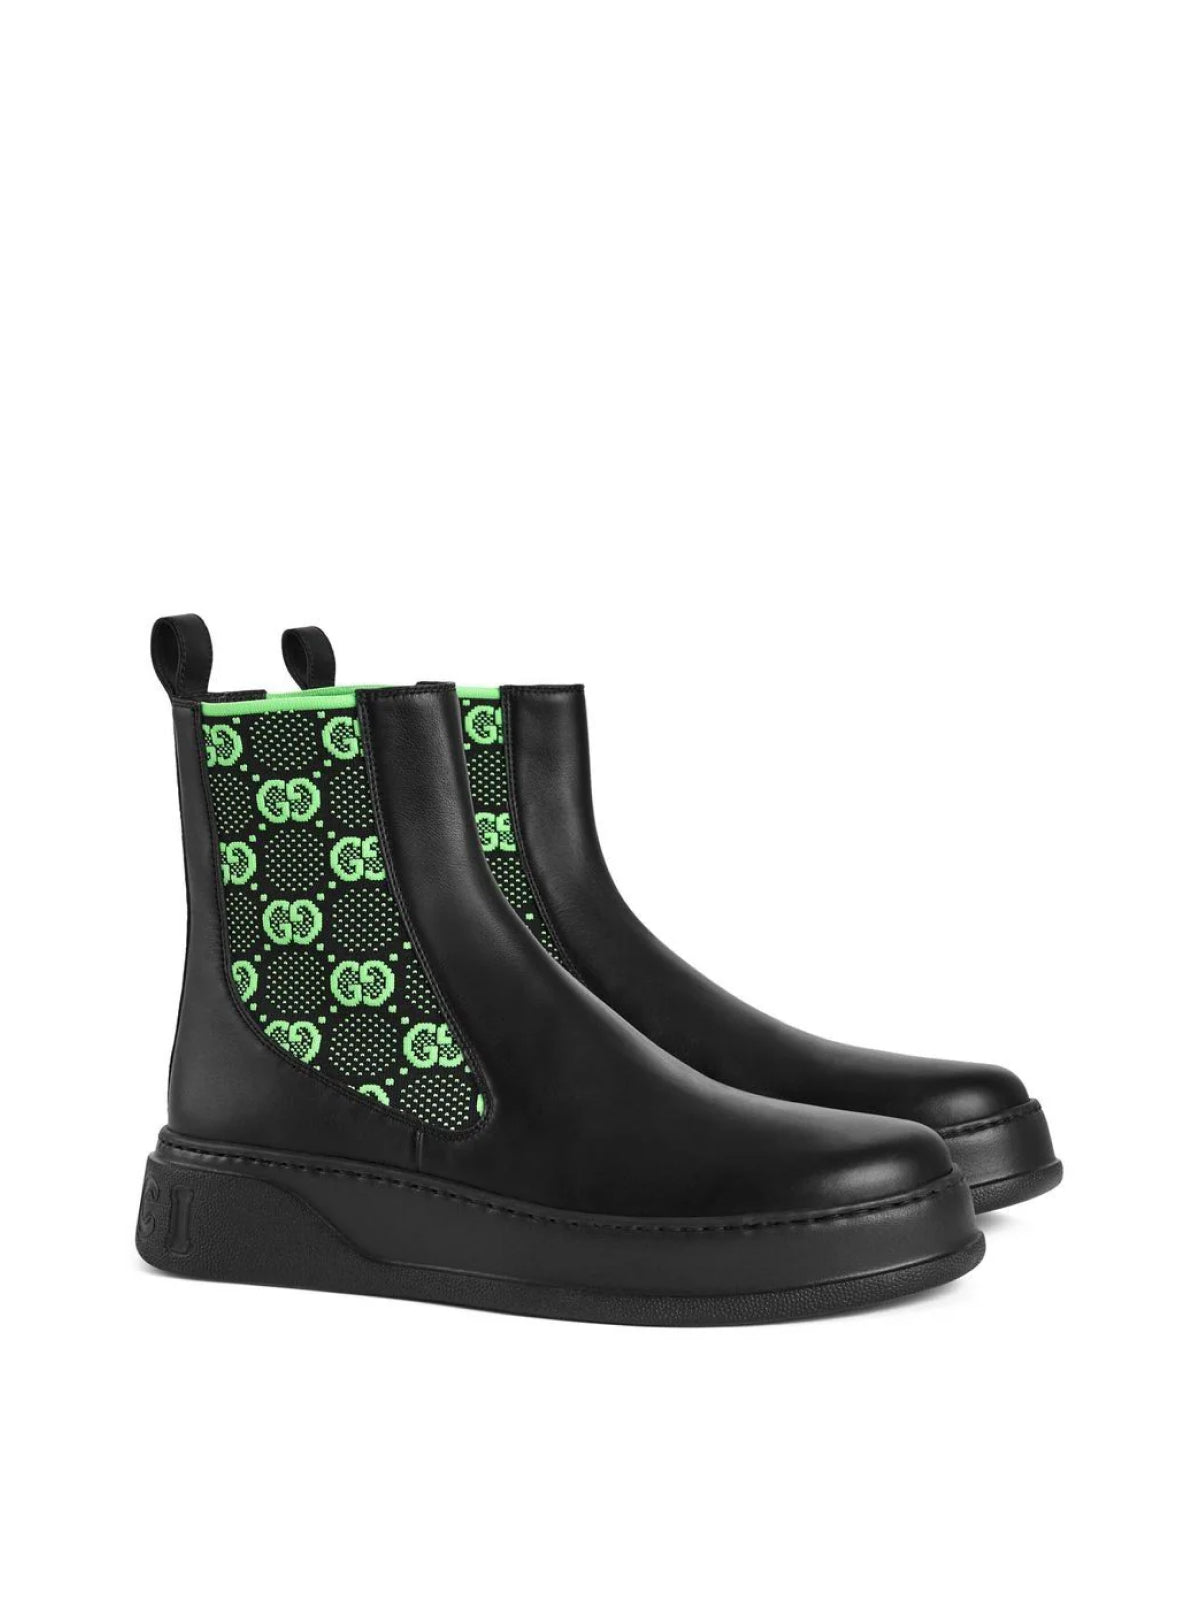 Gucci-OUTLET-SALE-GG Supreme Monogram Ankle Boots-ARCHIVIST